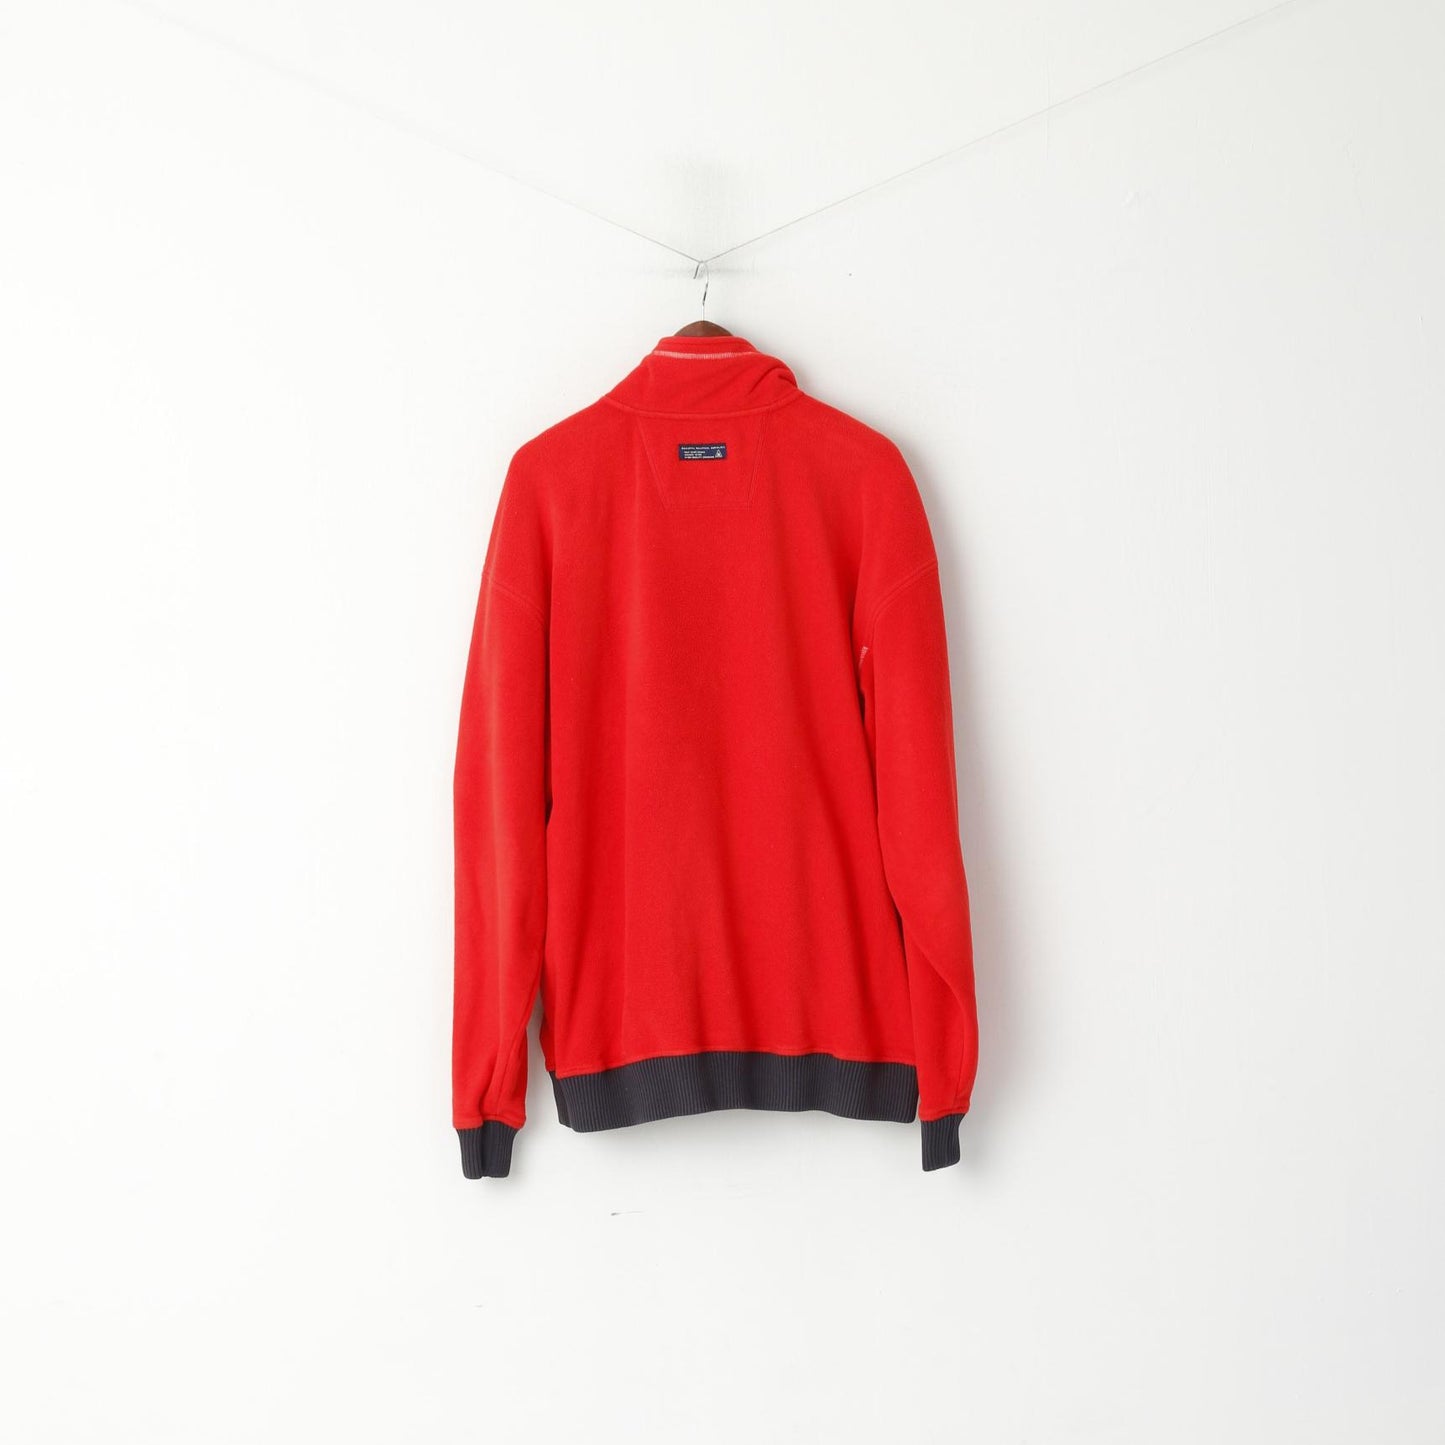 Gaastra Men XXL Fleece Top Red Full Zipper Pockt Casual Sport Sweatshirt